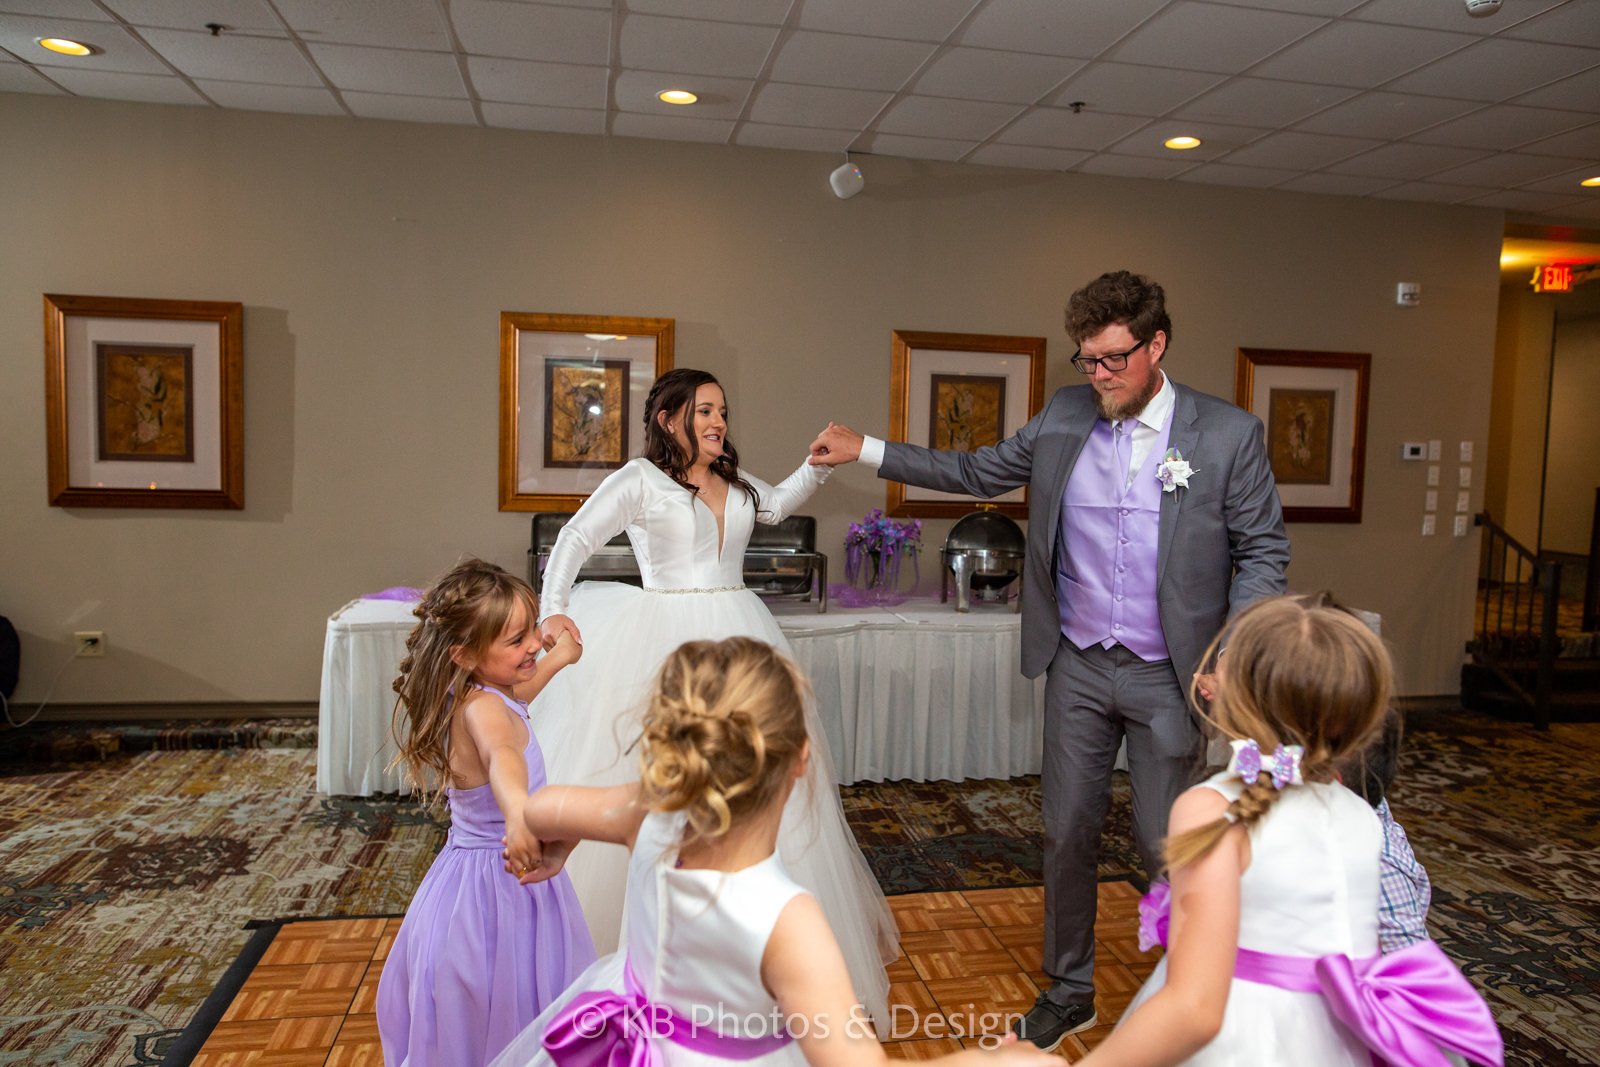 Wedding-Lanna-Brad-Lodge-of-Four-Seasons-St-Louis-STL-Lake-of-the-Ozarks-Missouri-wedding-photographer-KB-Photos-and-Design-bride-groom-photos-666.jpg